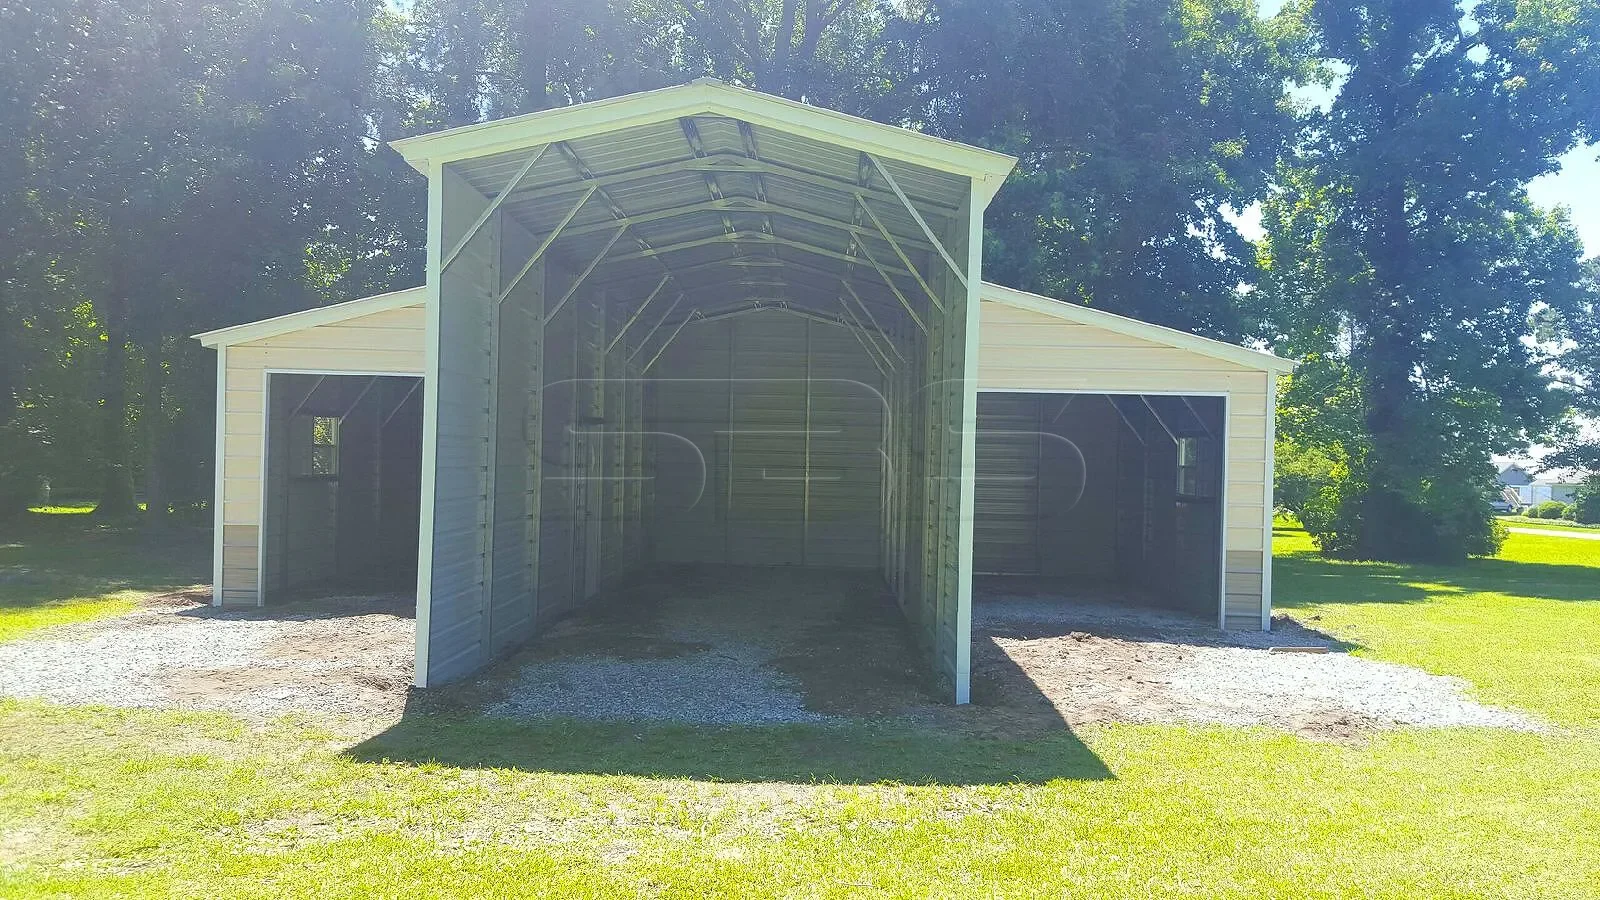 36 x 36 metal barn with RV storage